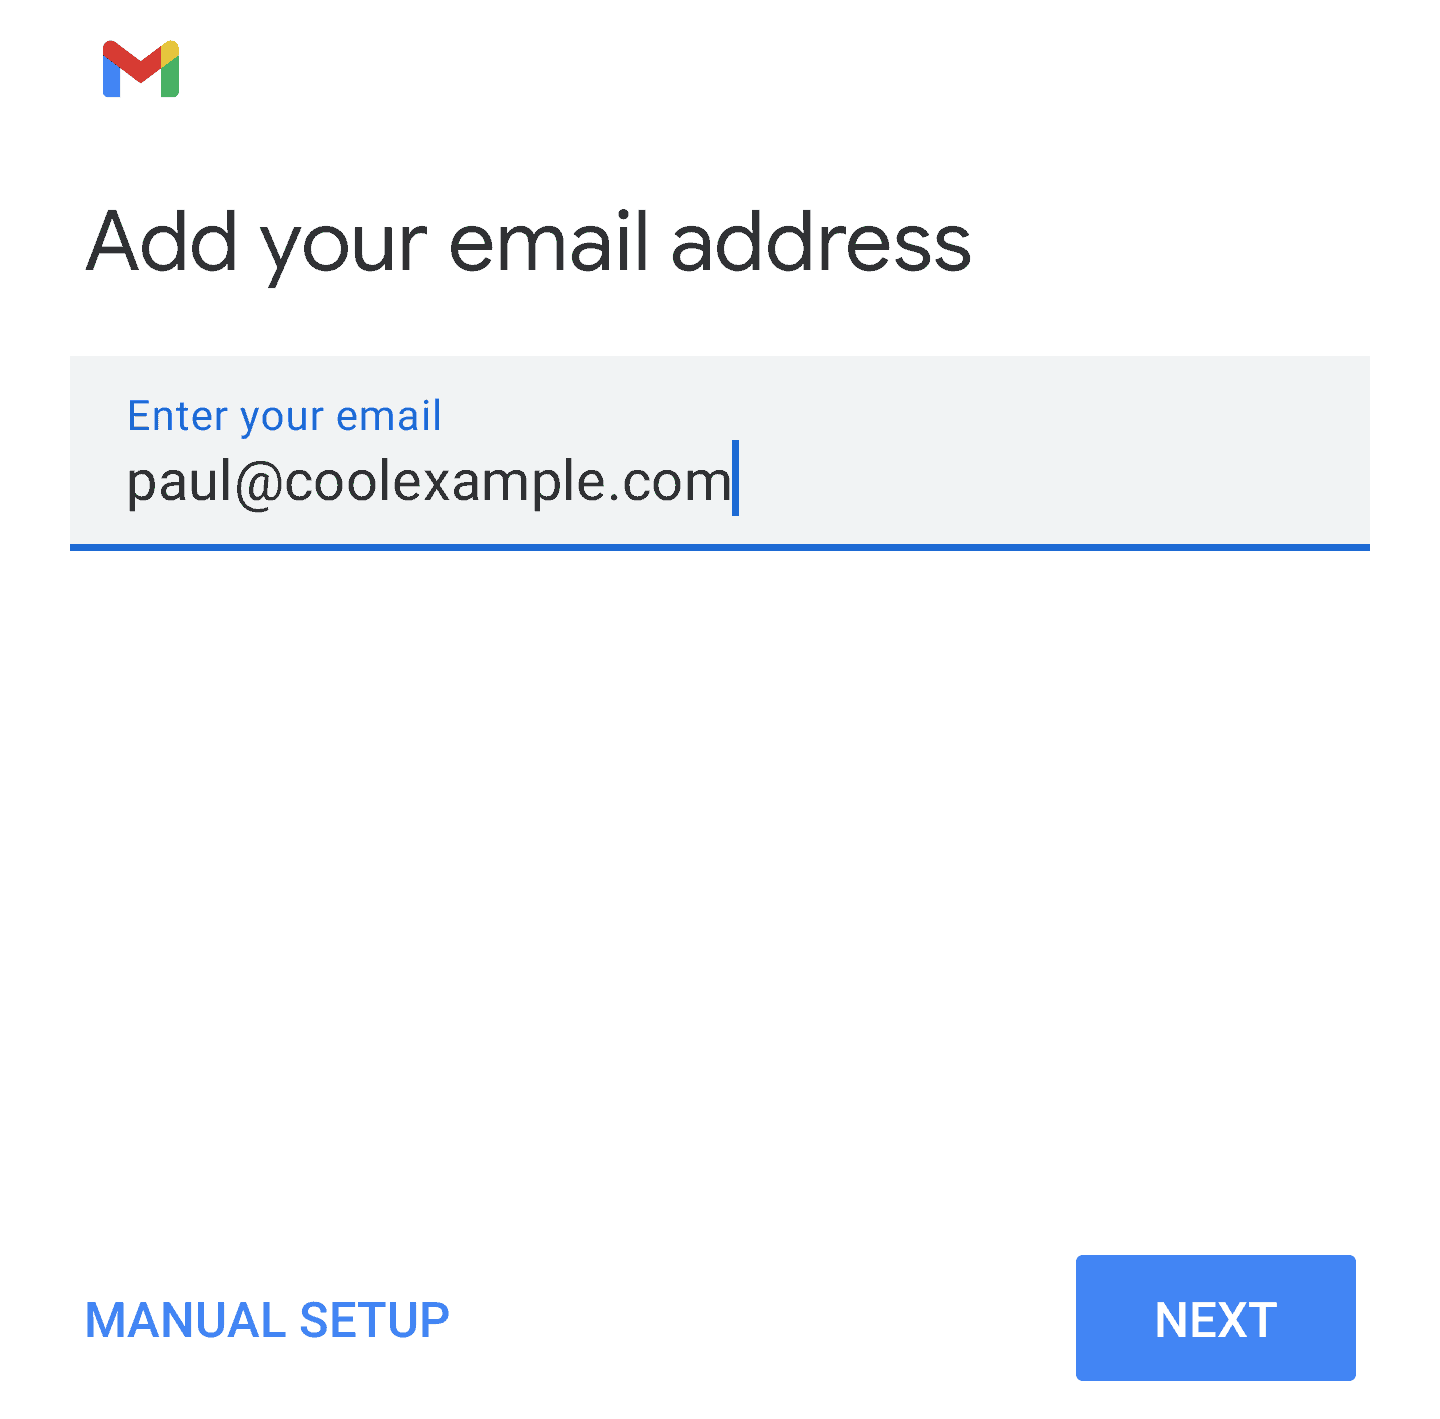 enter-email-address